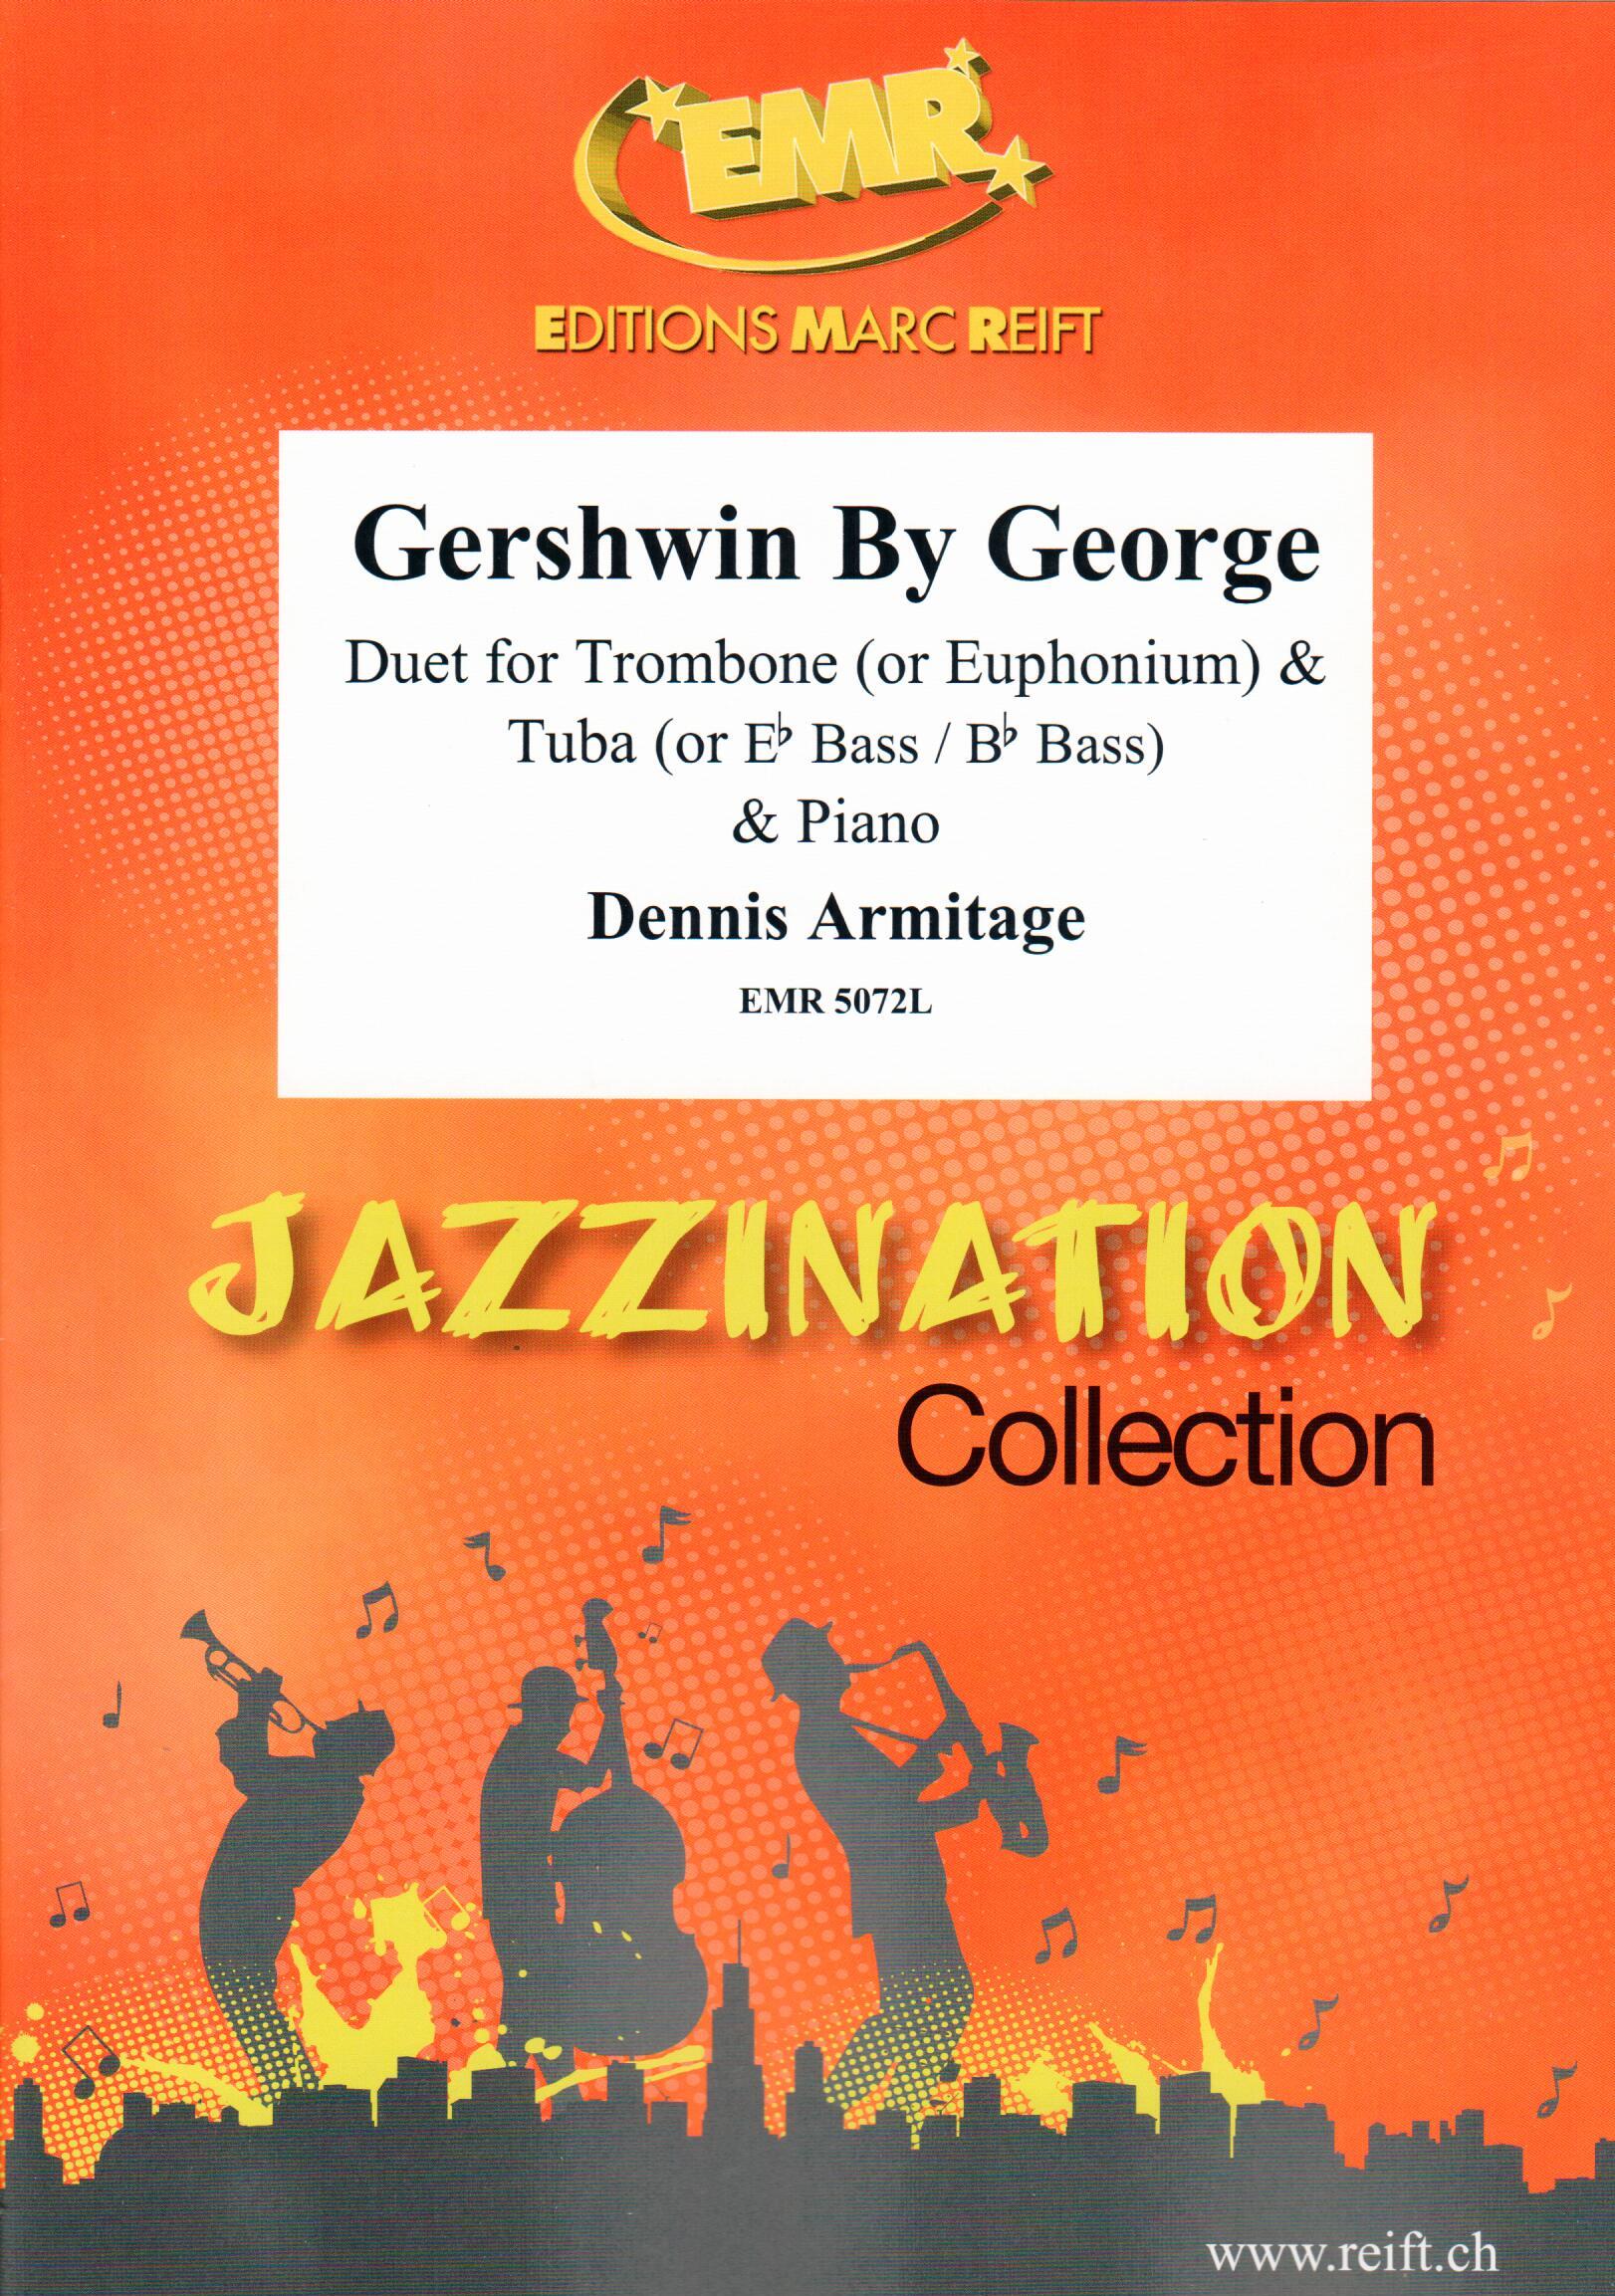 GERSHWIN BY GEORGE, Duets